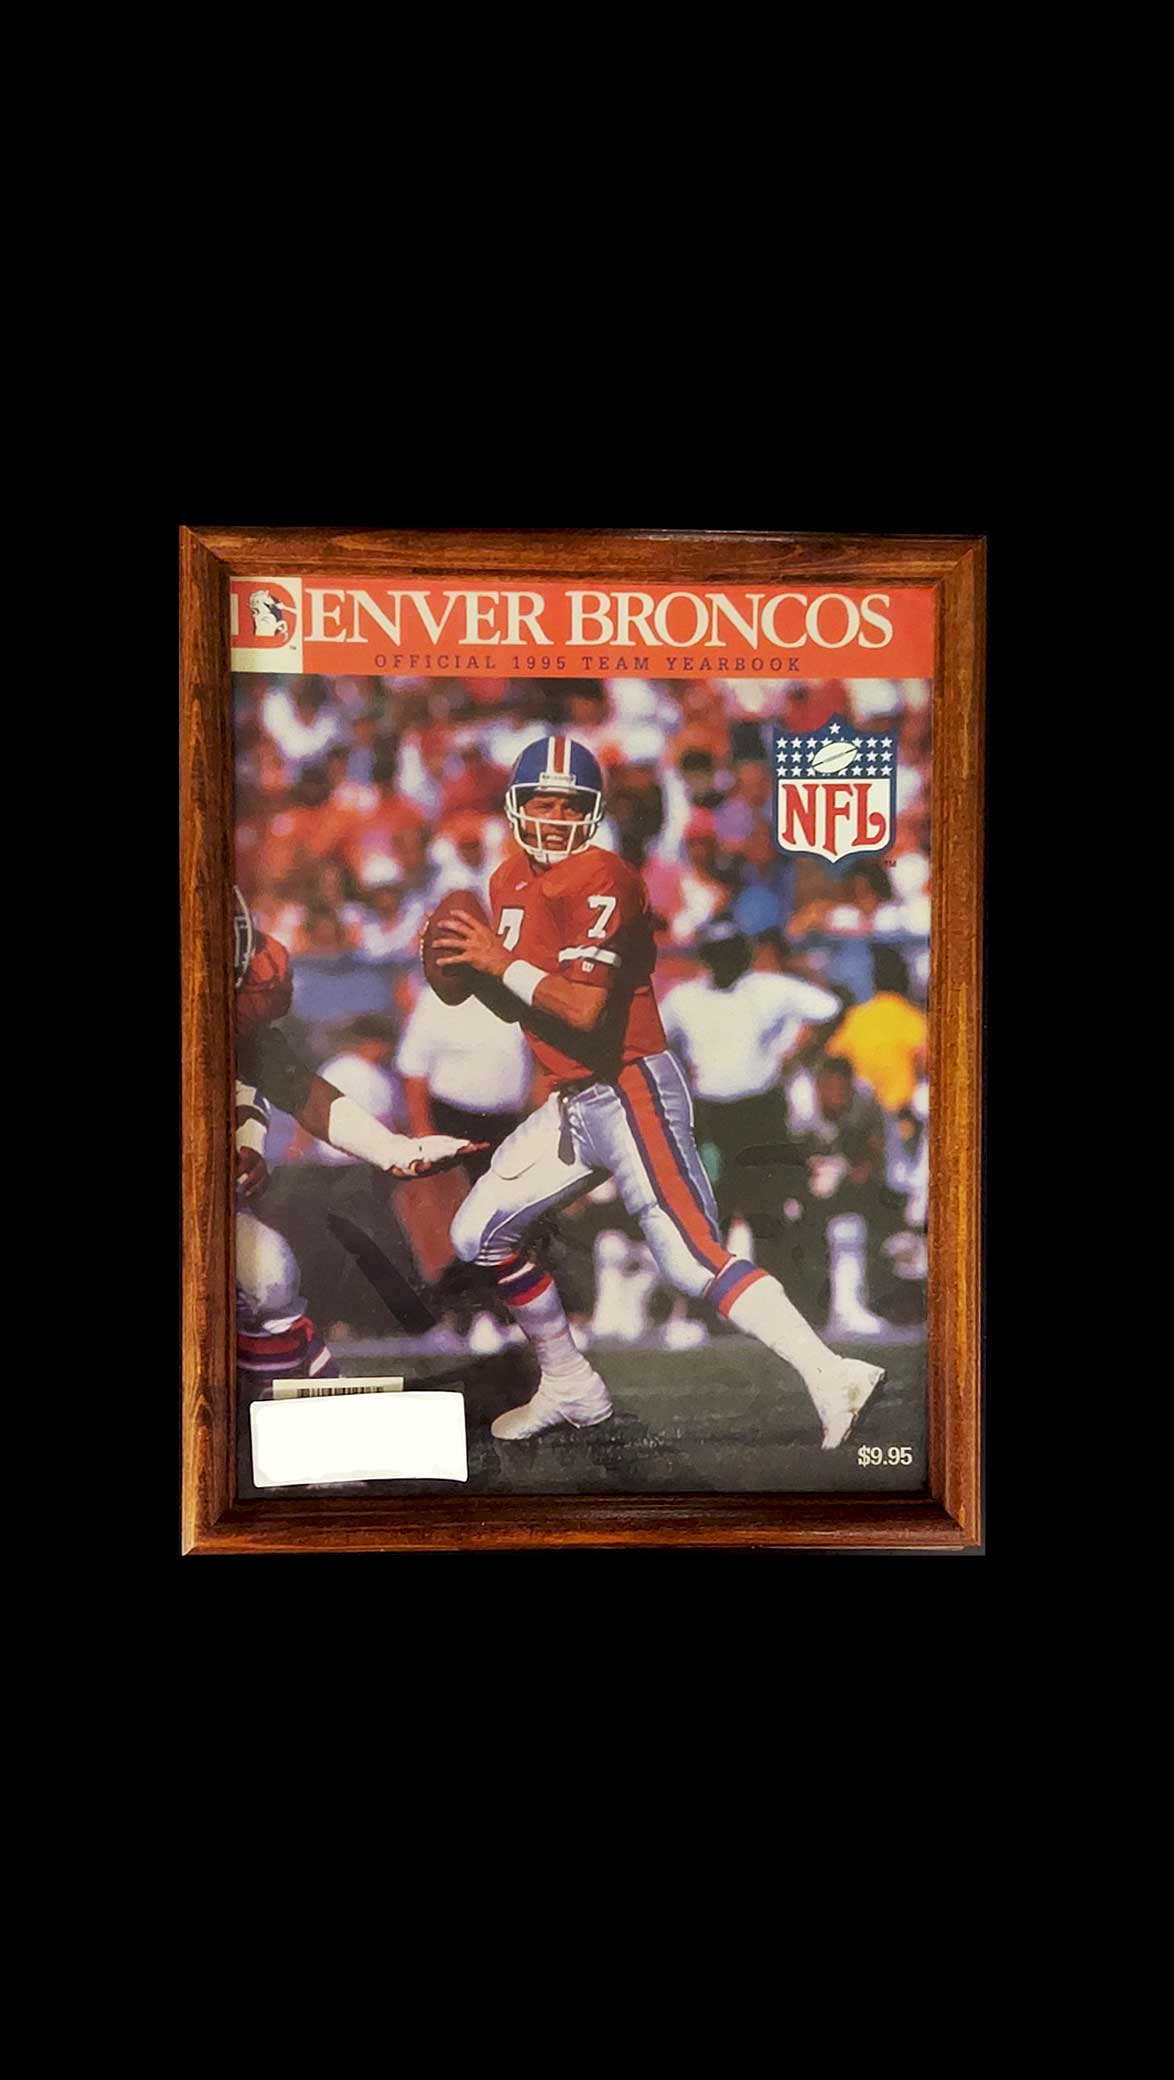 Denver-Broncos-Official-1995-Team-Yearbook